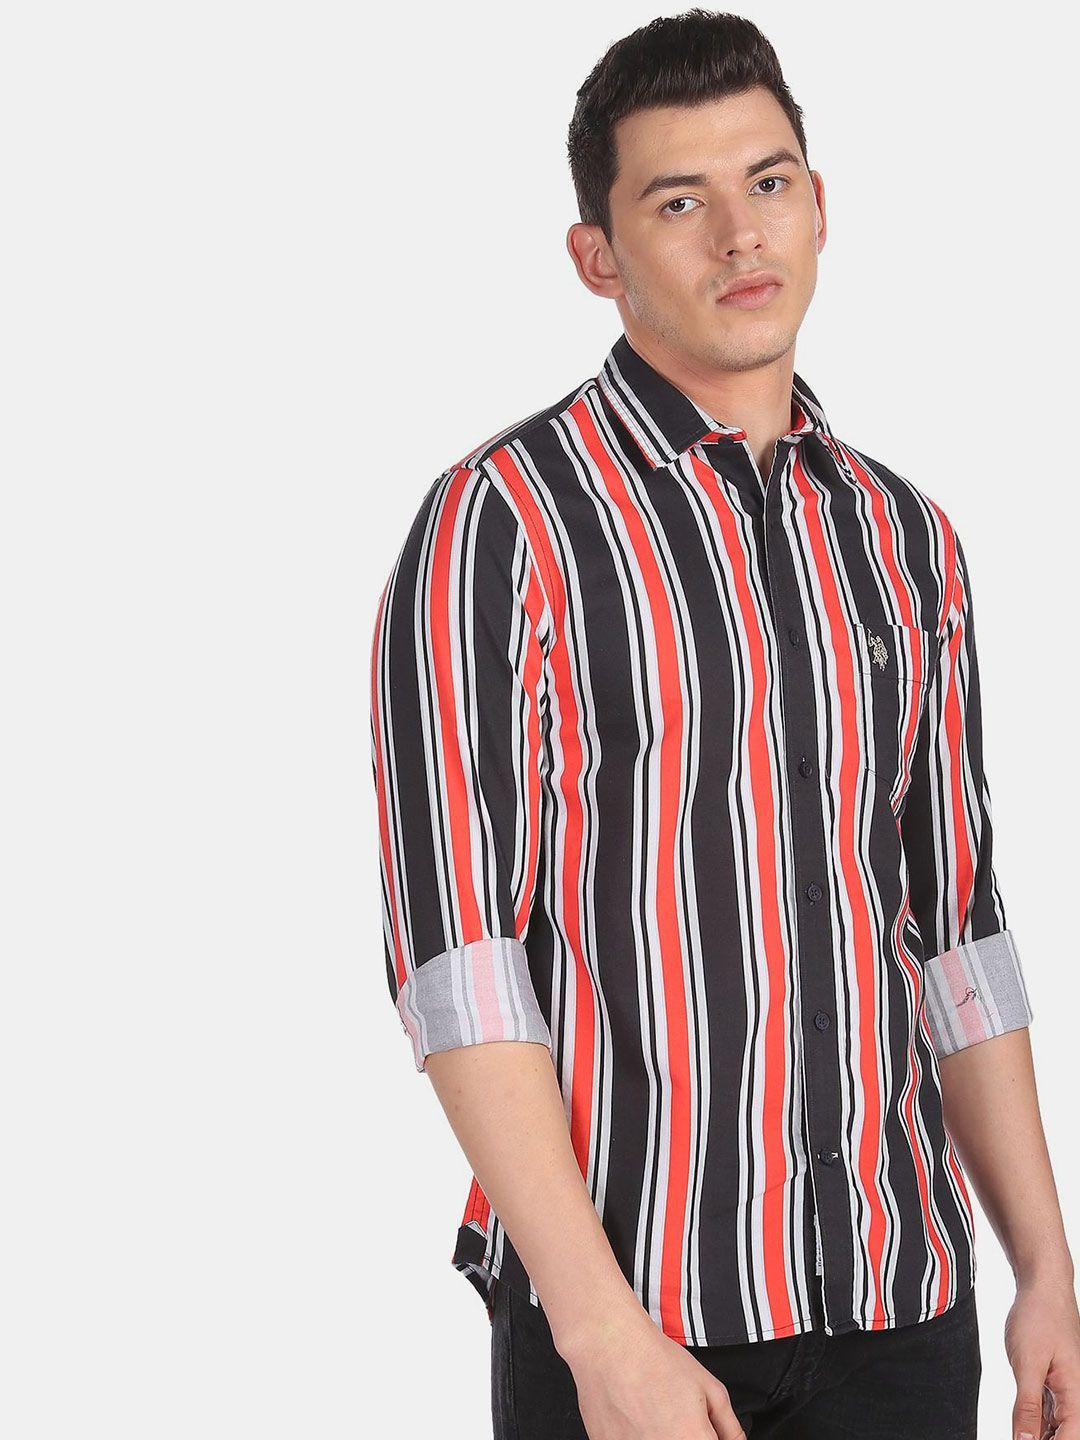 u s polo assn men black & red multi striped casual cotton shirt